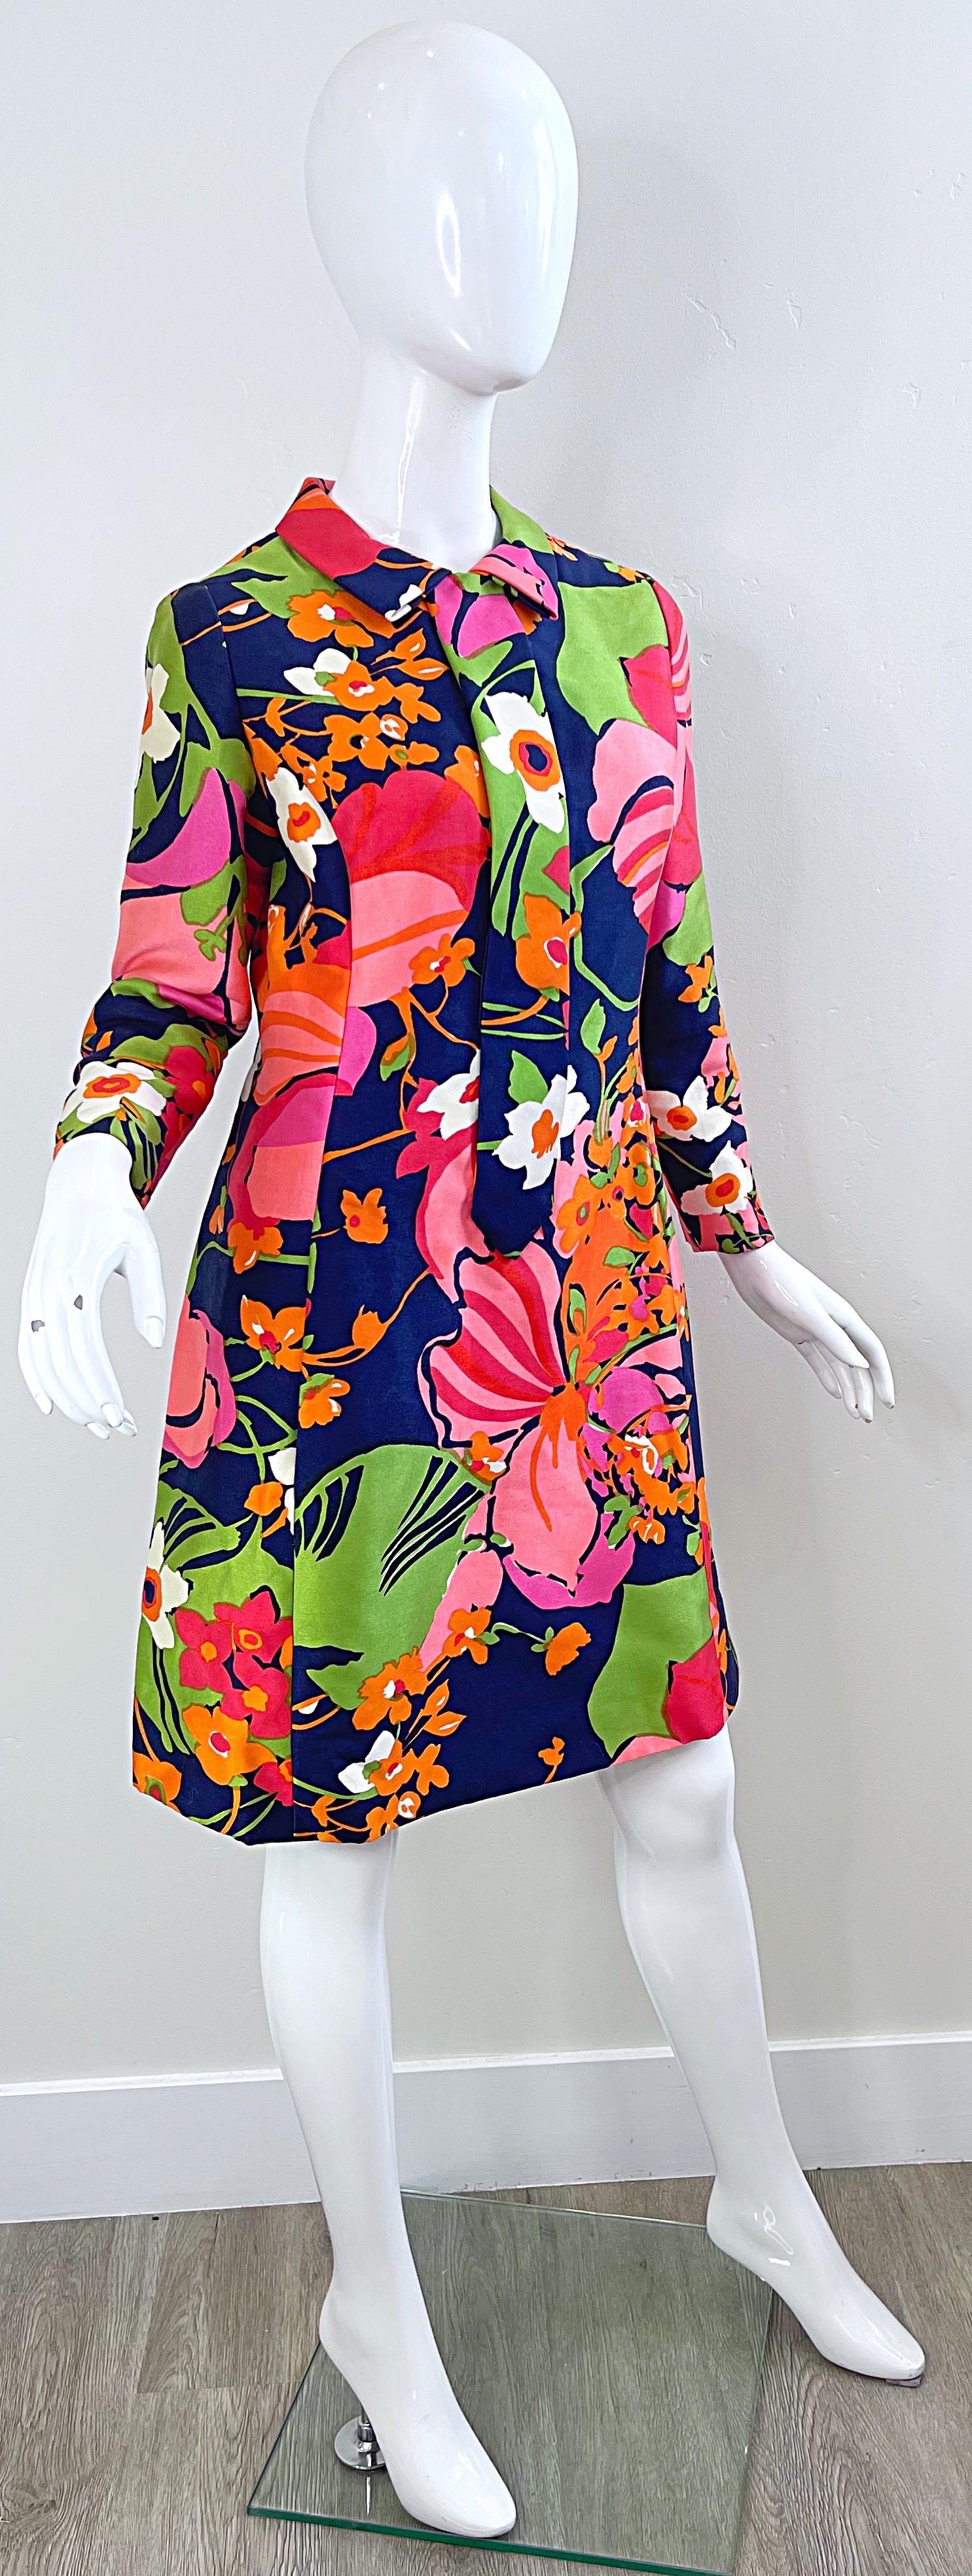 Saks 5th Avenue 1960s Mod Retro Abstract Flower Print Vintage 60s Silk Dress 2